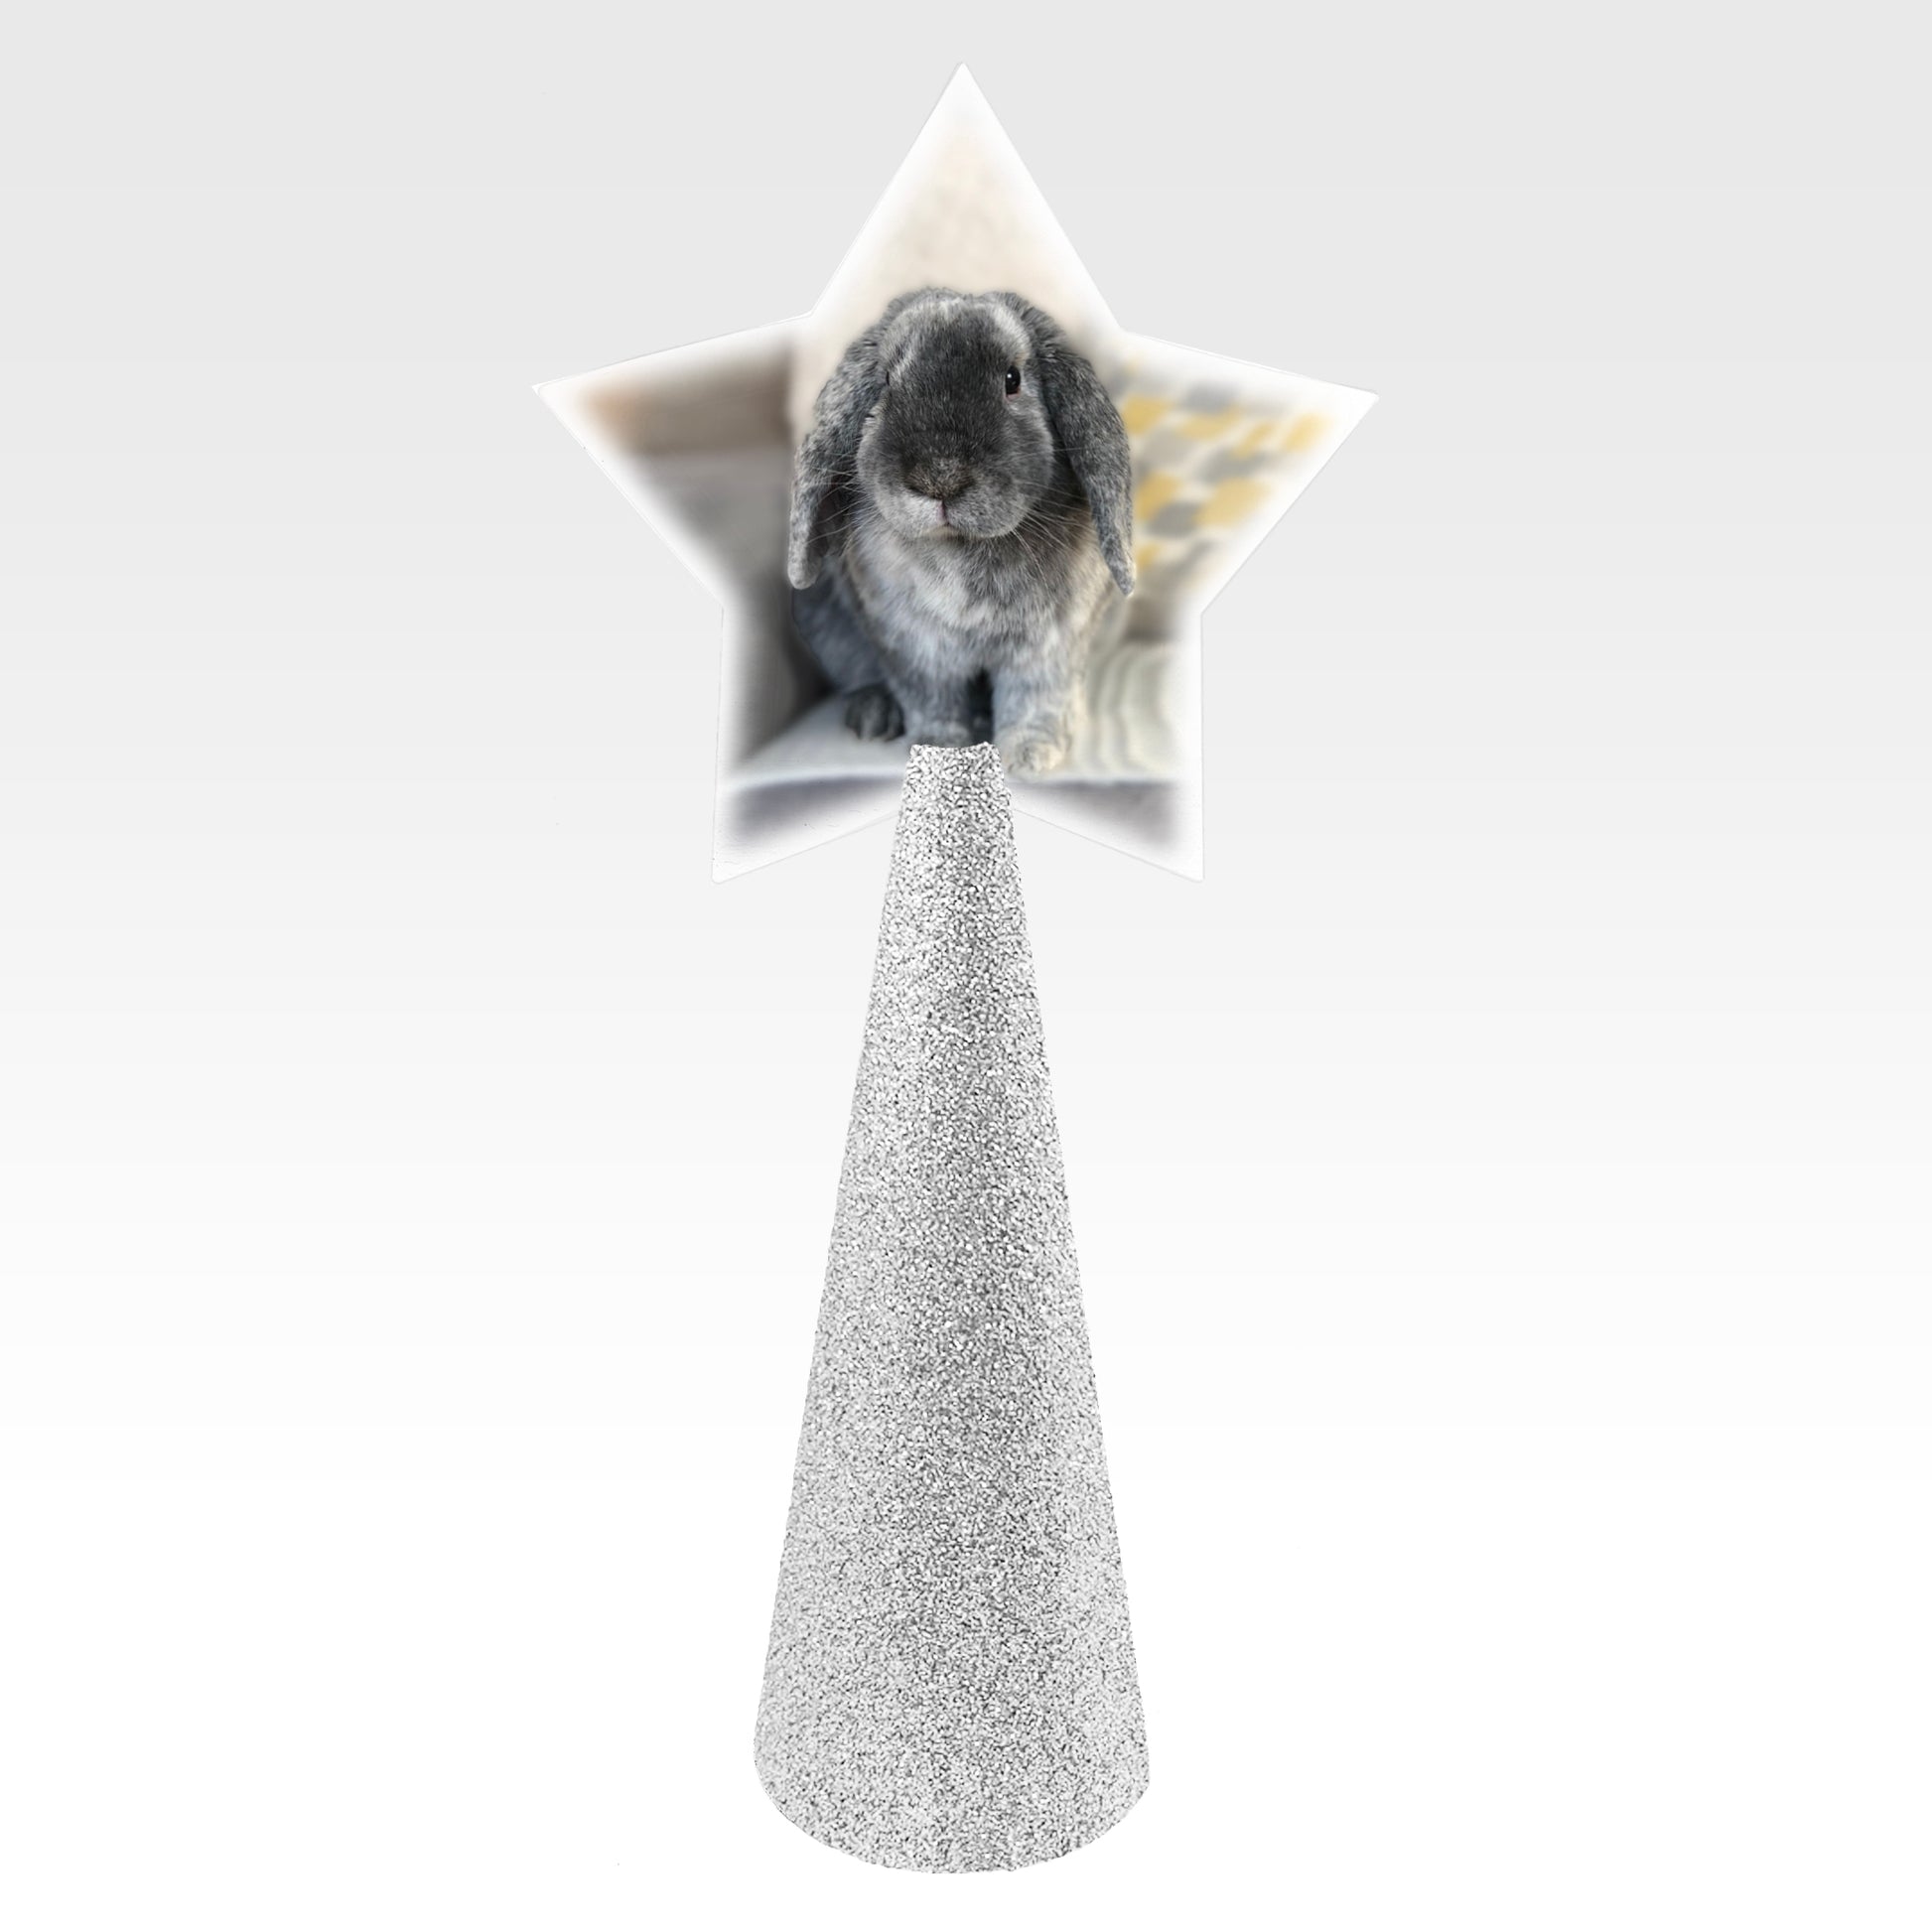 Custom tree topper - White Star with sample rabbit photo - silver glitter cone